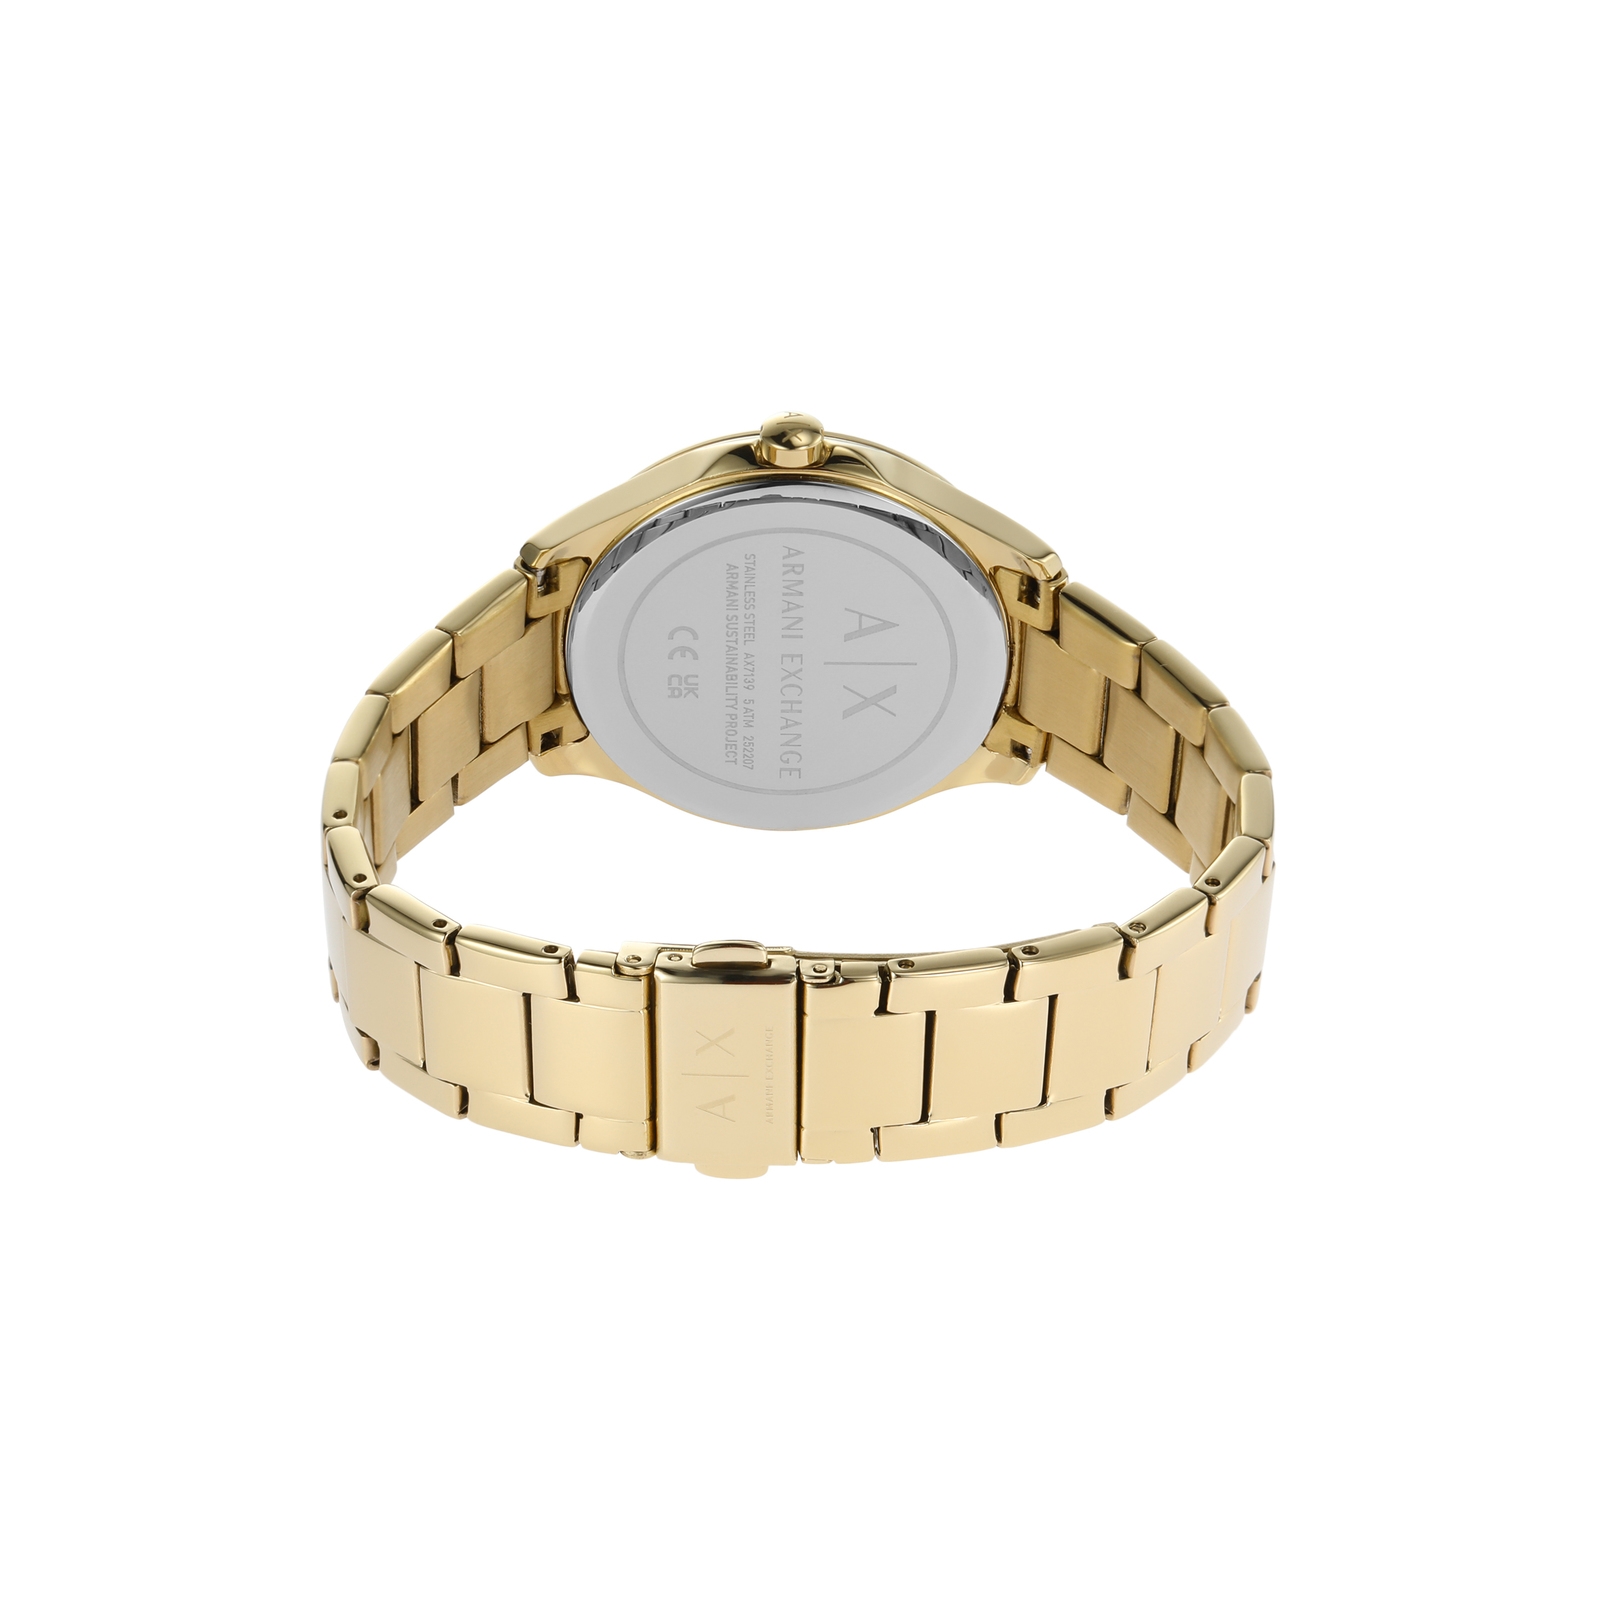 Armani Exchange Gold Watch AX7139SET